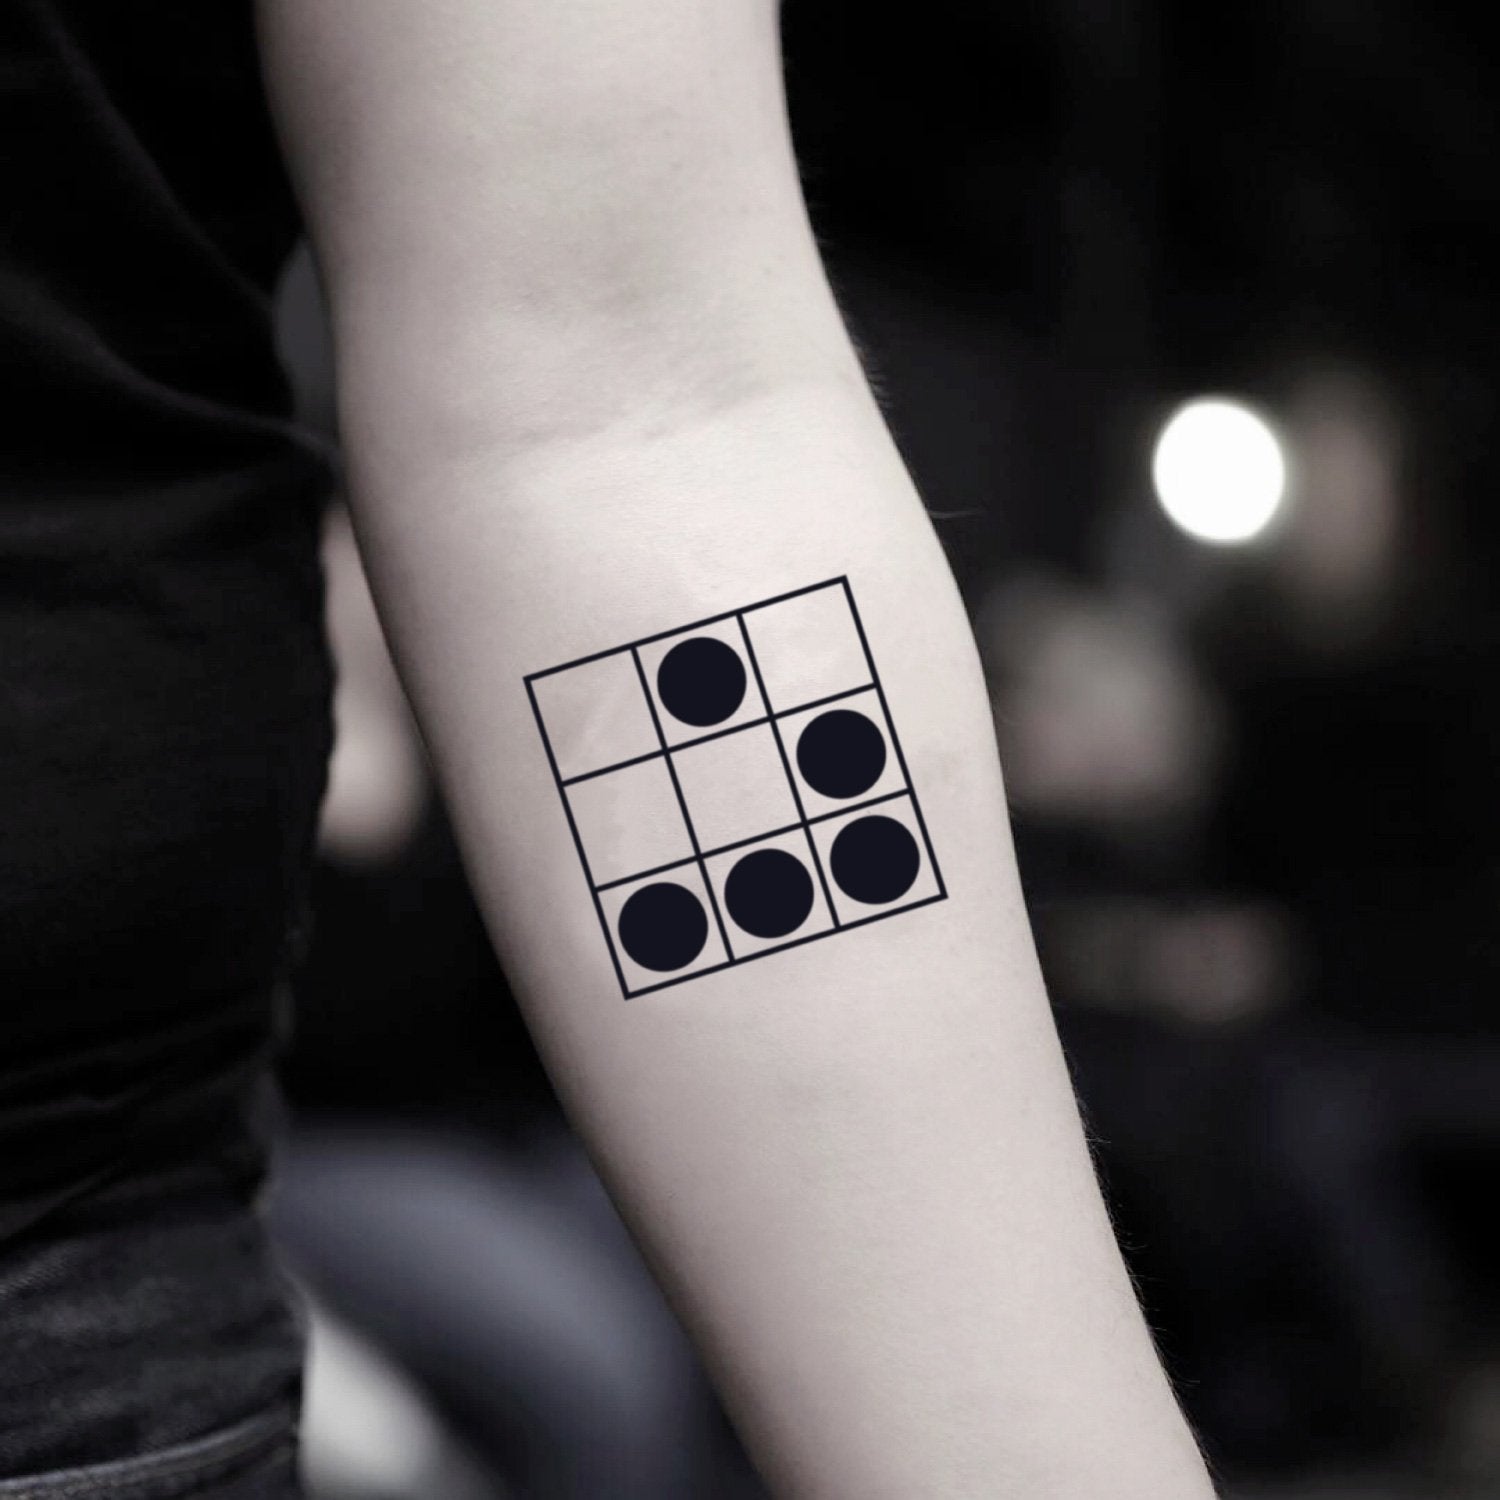 fake small hacker glider emblem geometric temporary tattoo sticker design idea on inner arm